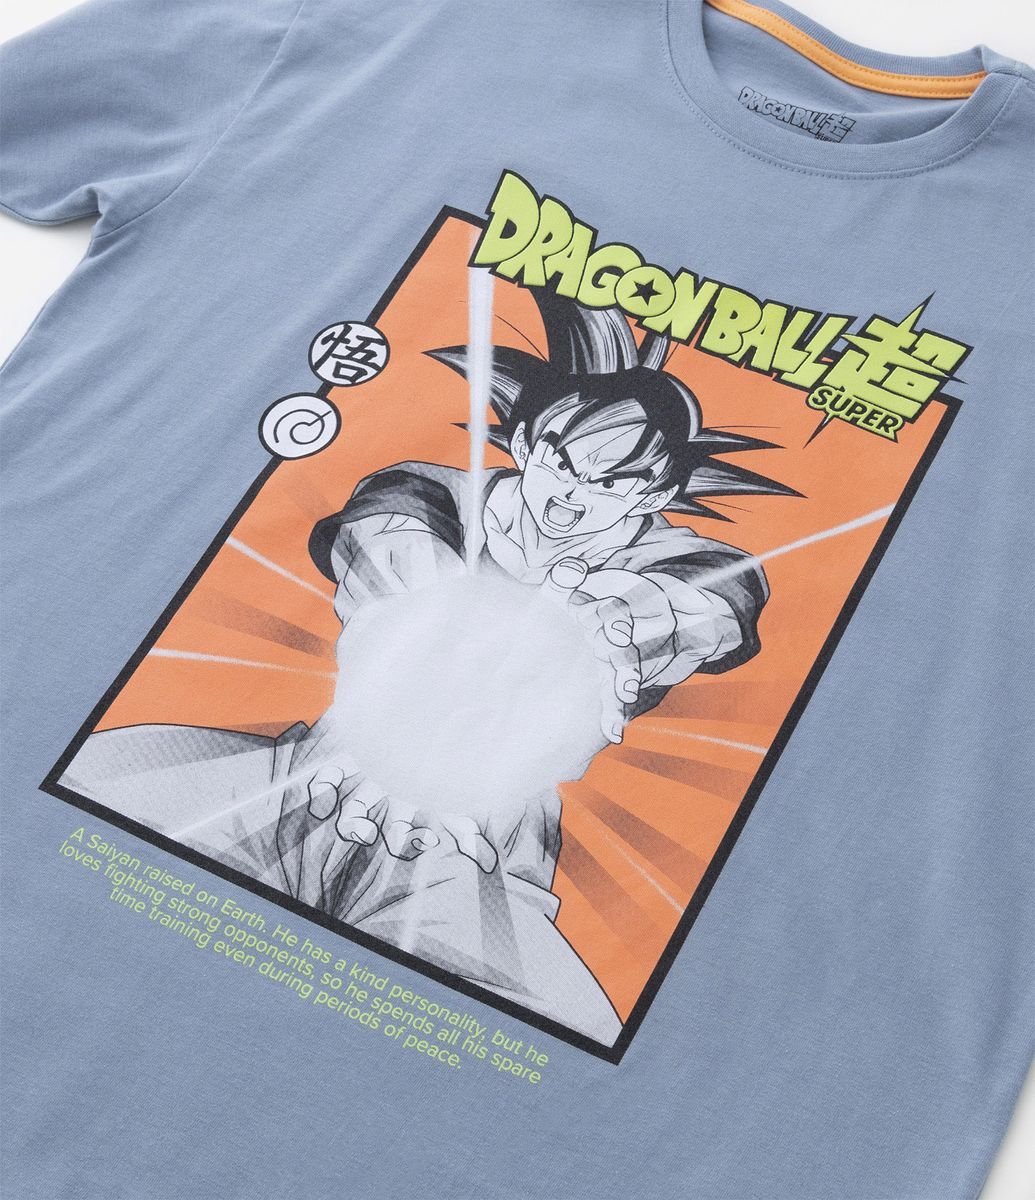 Camiseta Dragon Ball Super Goku SSJ Blue - Estampa Total